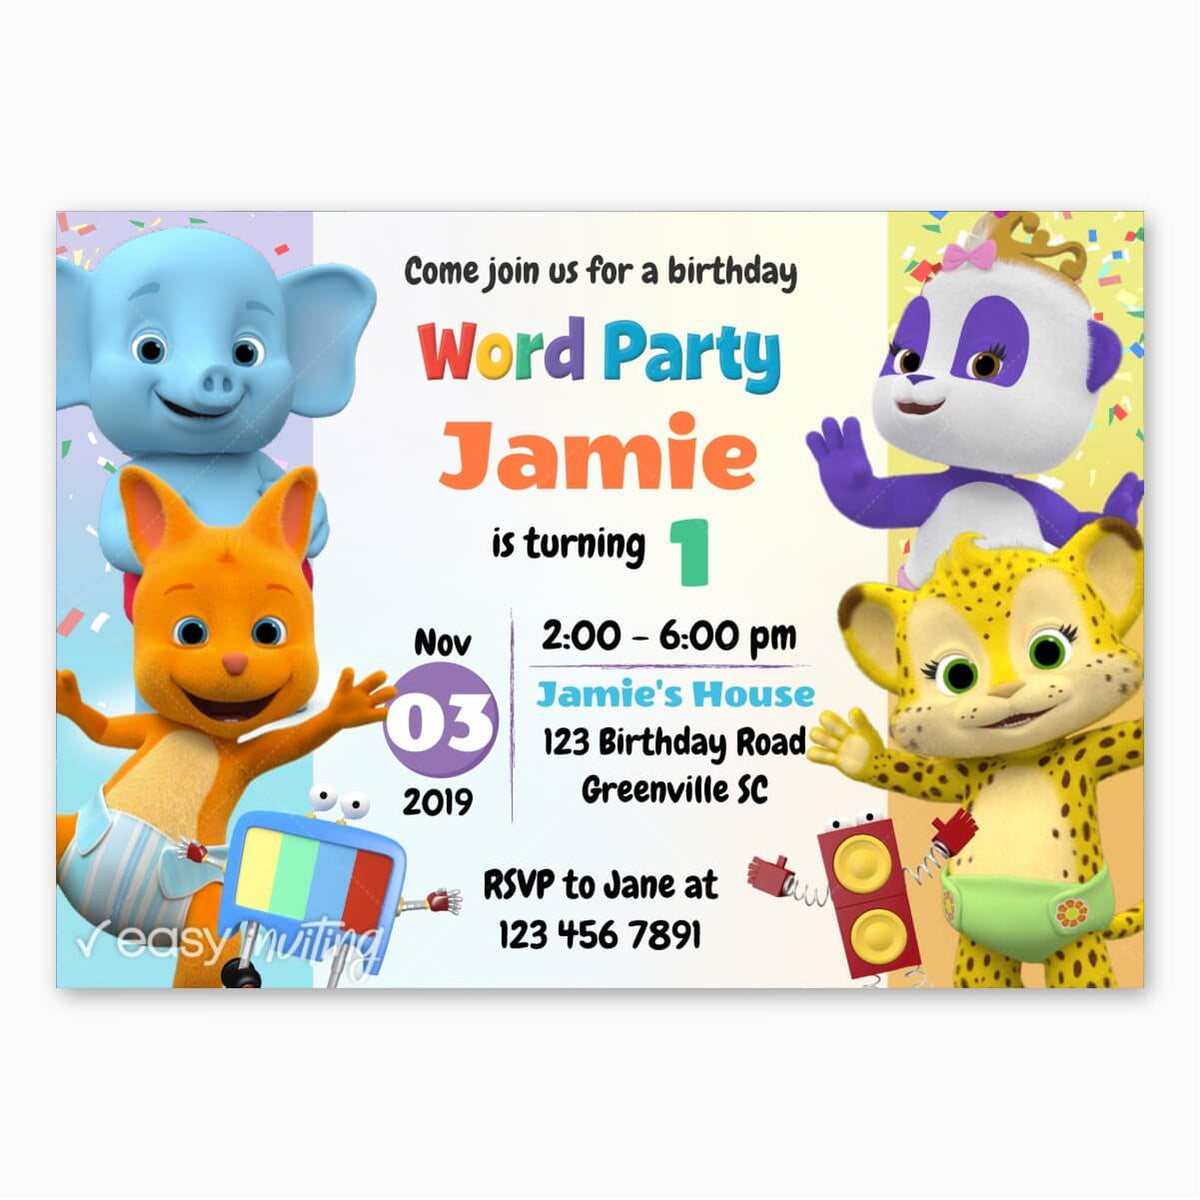 Word Party Birthday Invitation Easy Inviting